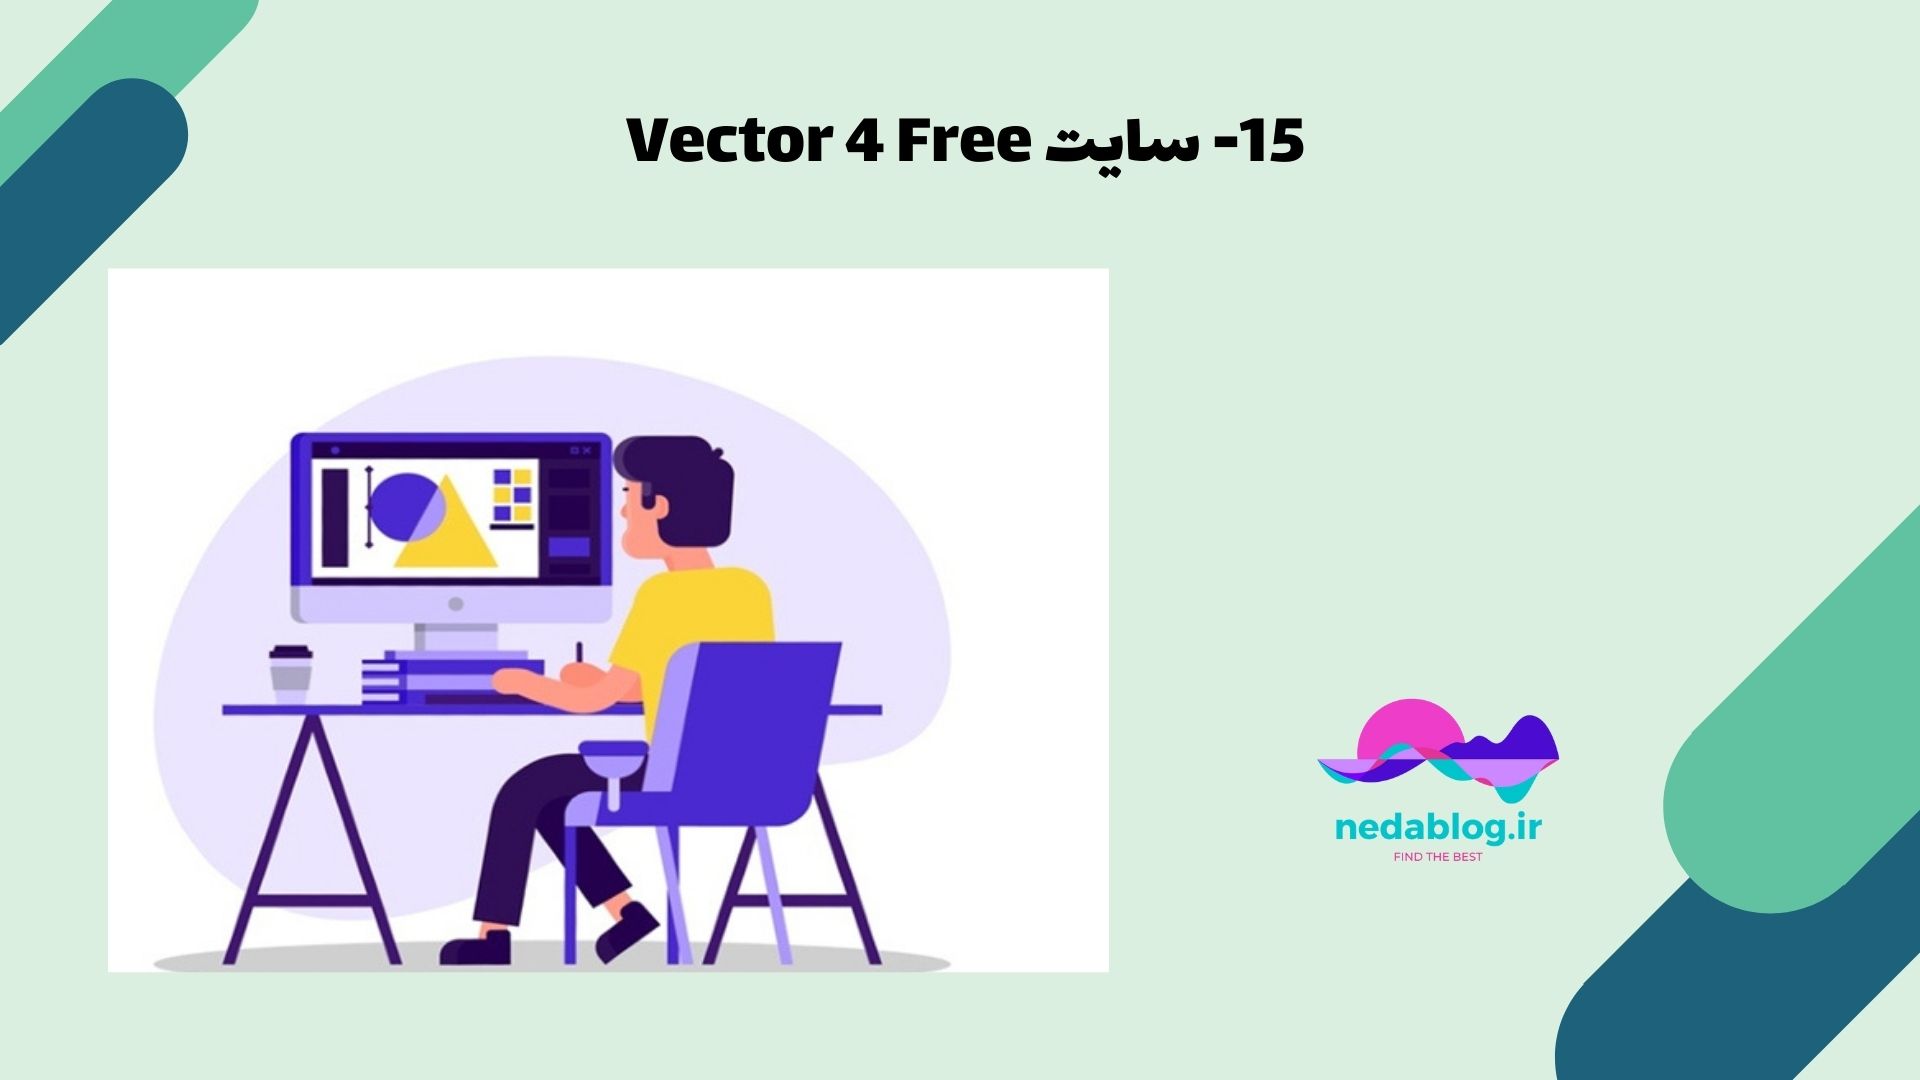 سایت Vector 4 Free